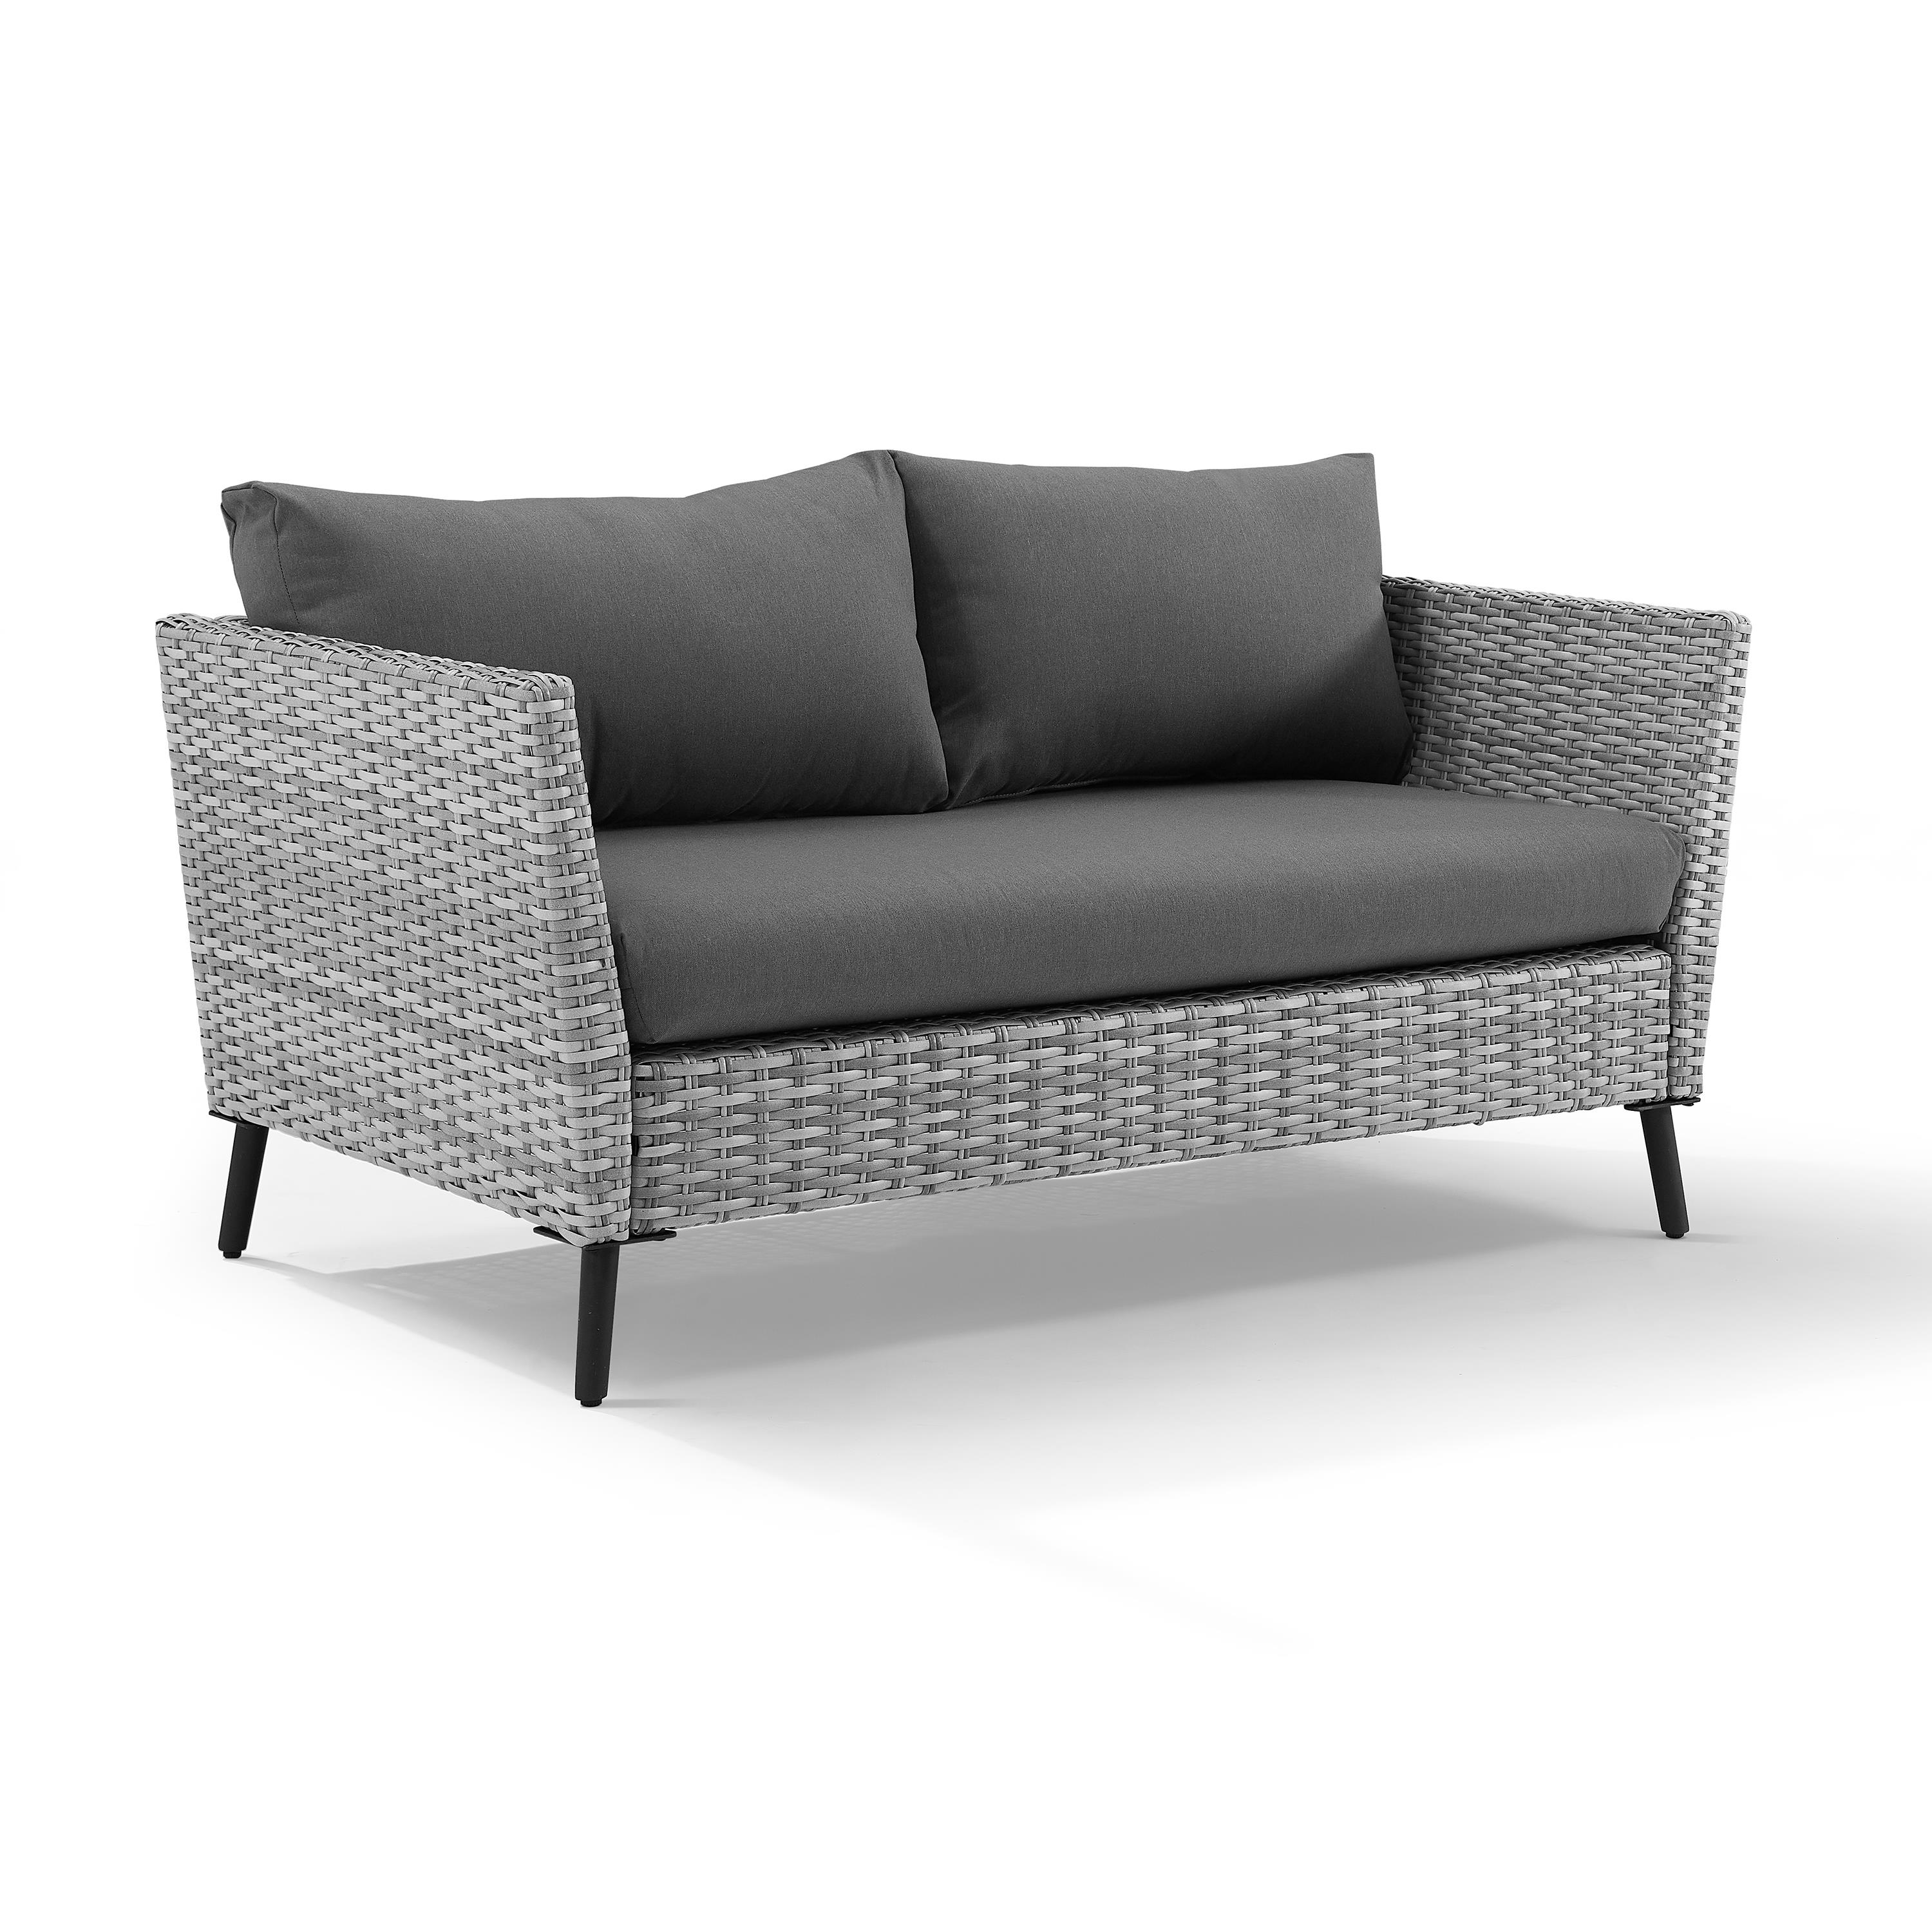 Crosley Richland 2 Piece Wicker Patio Sofa Set in Gray - image 3 of 10